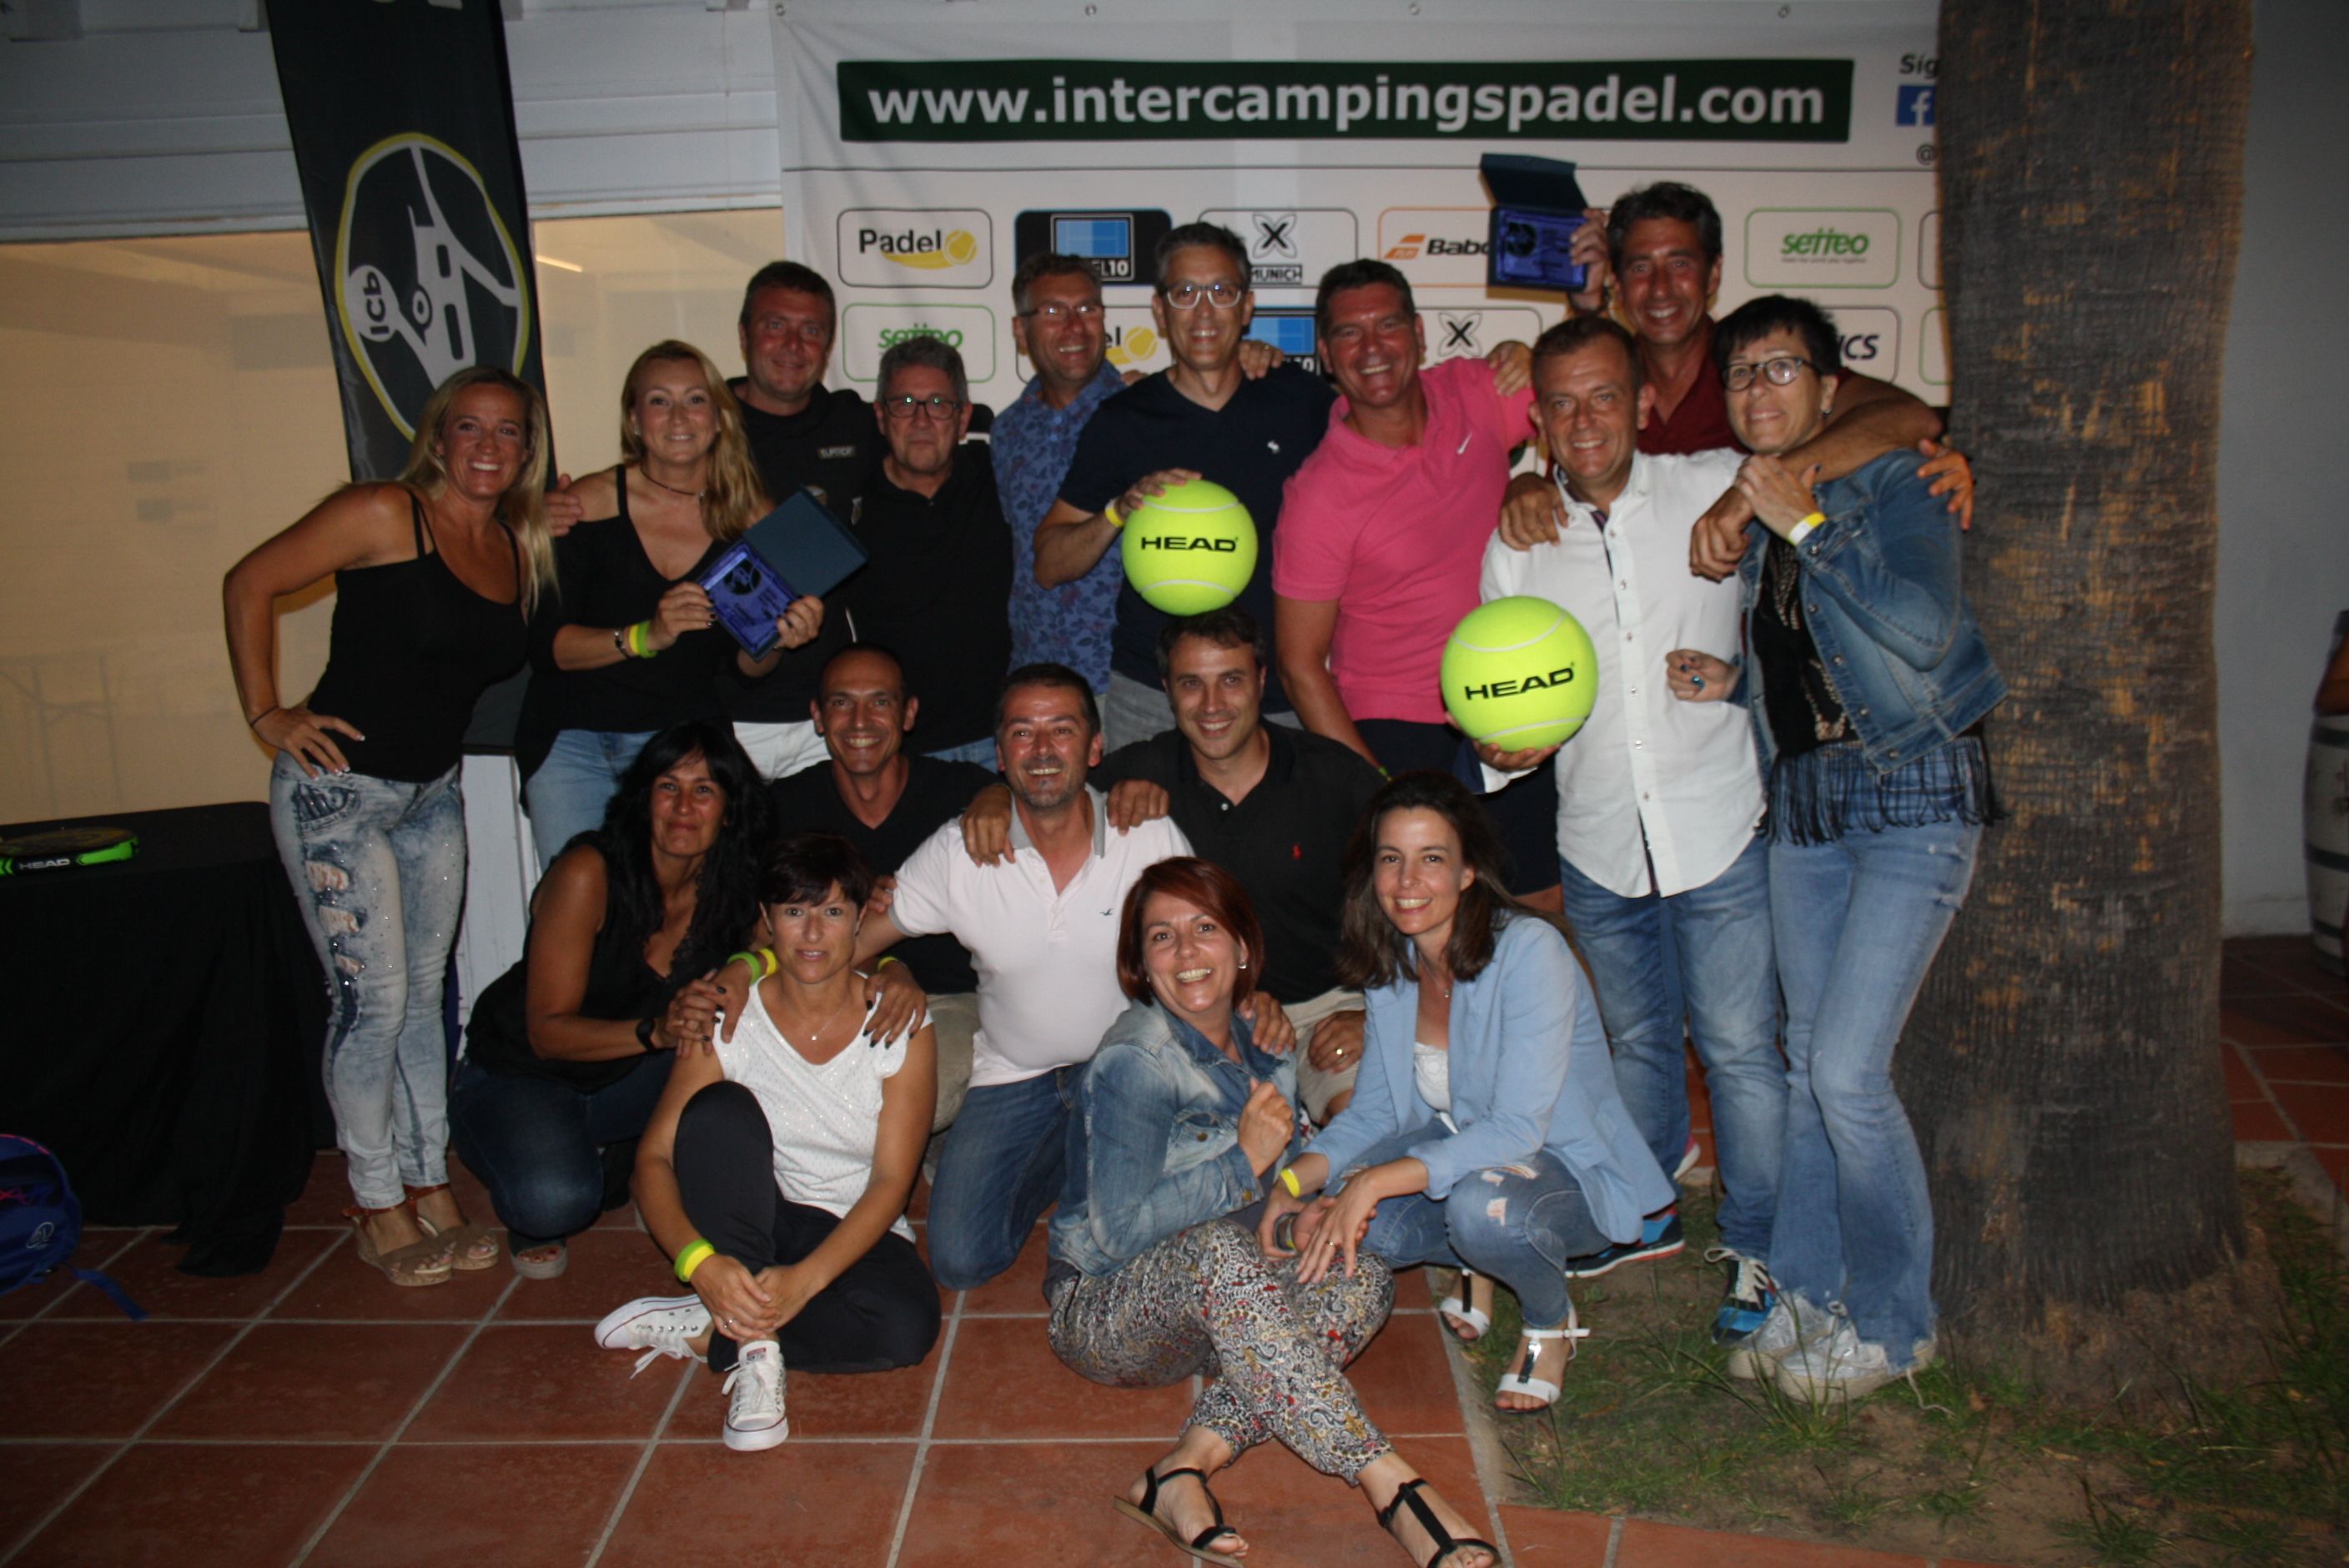 Teams Tamarit Champions of Inter Campings Padel by Head.